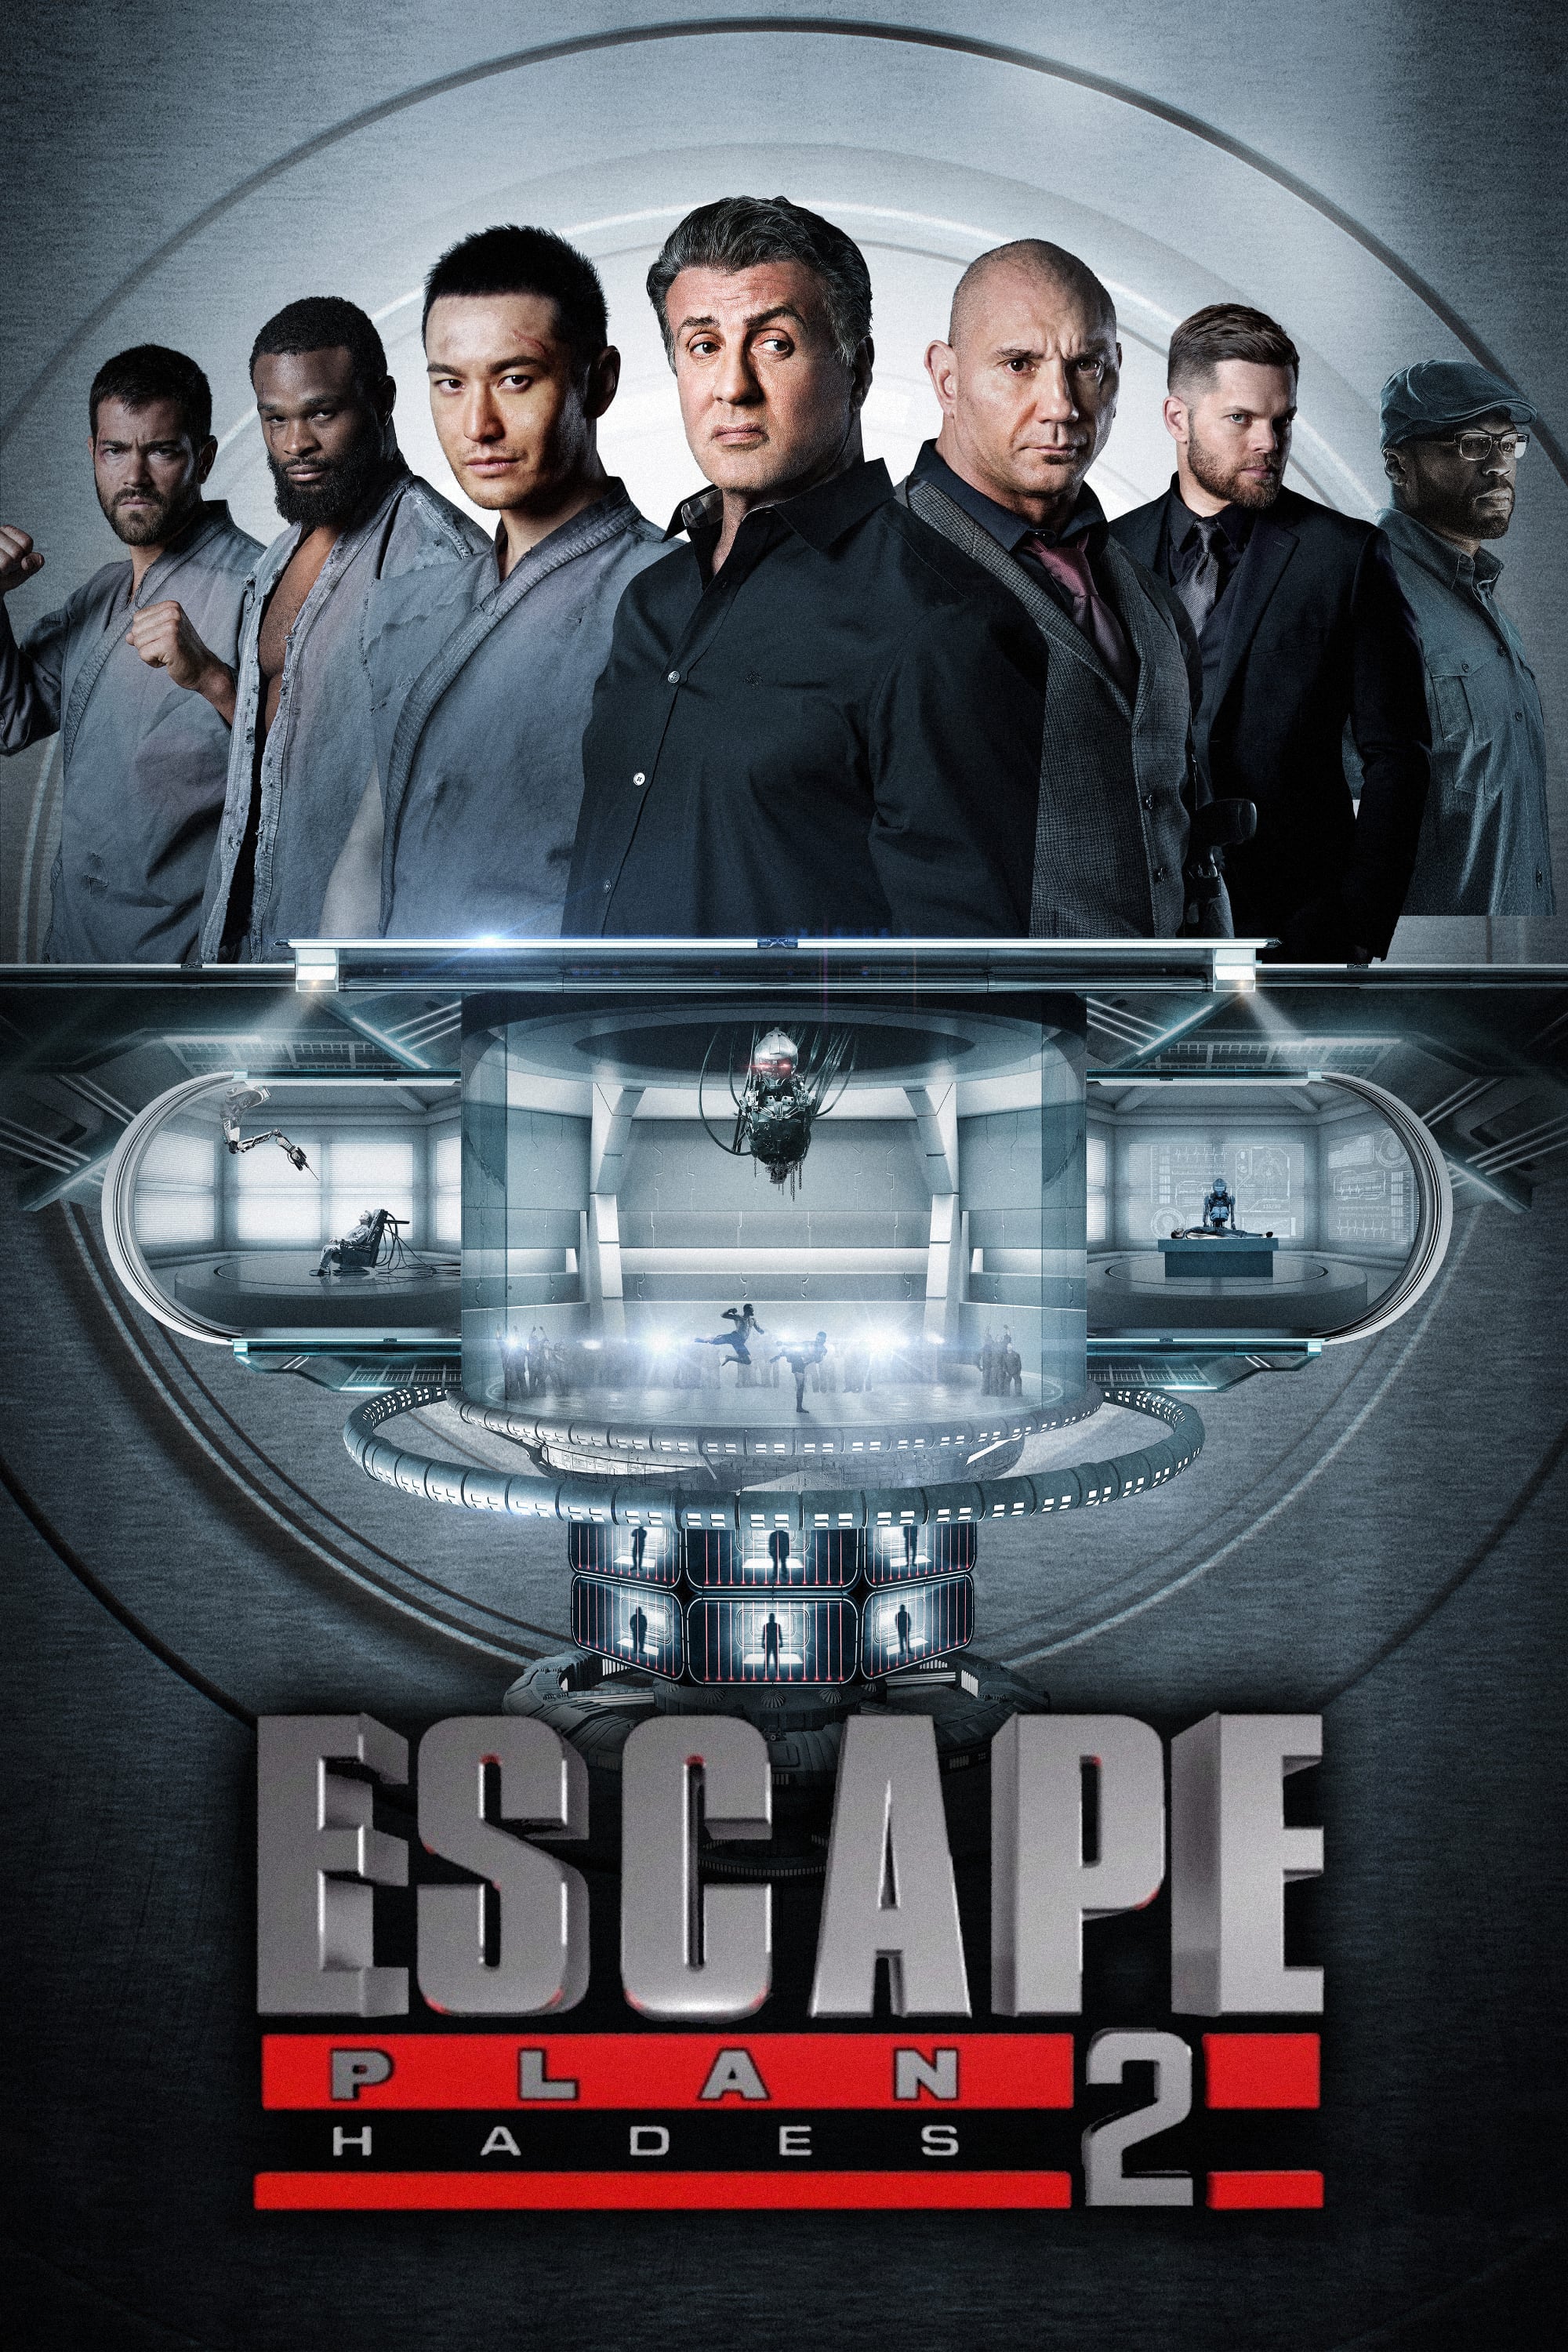 Escape plan full movie download in hindi mp4